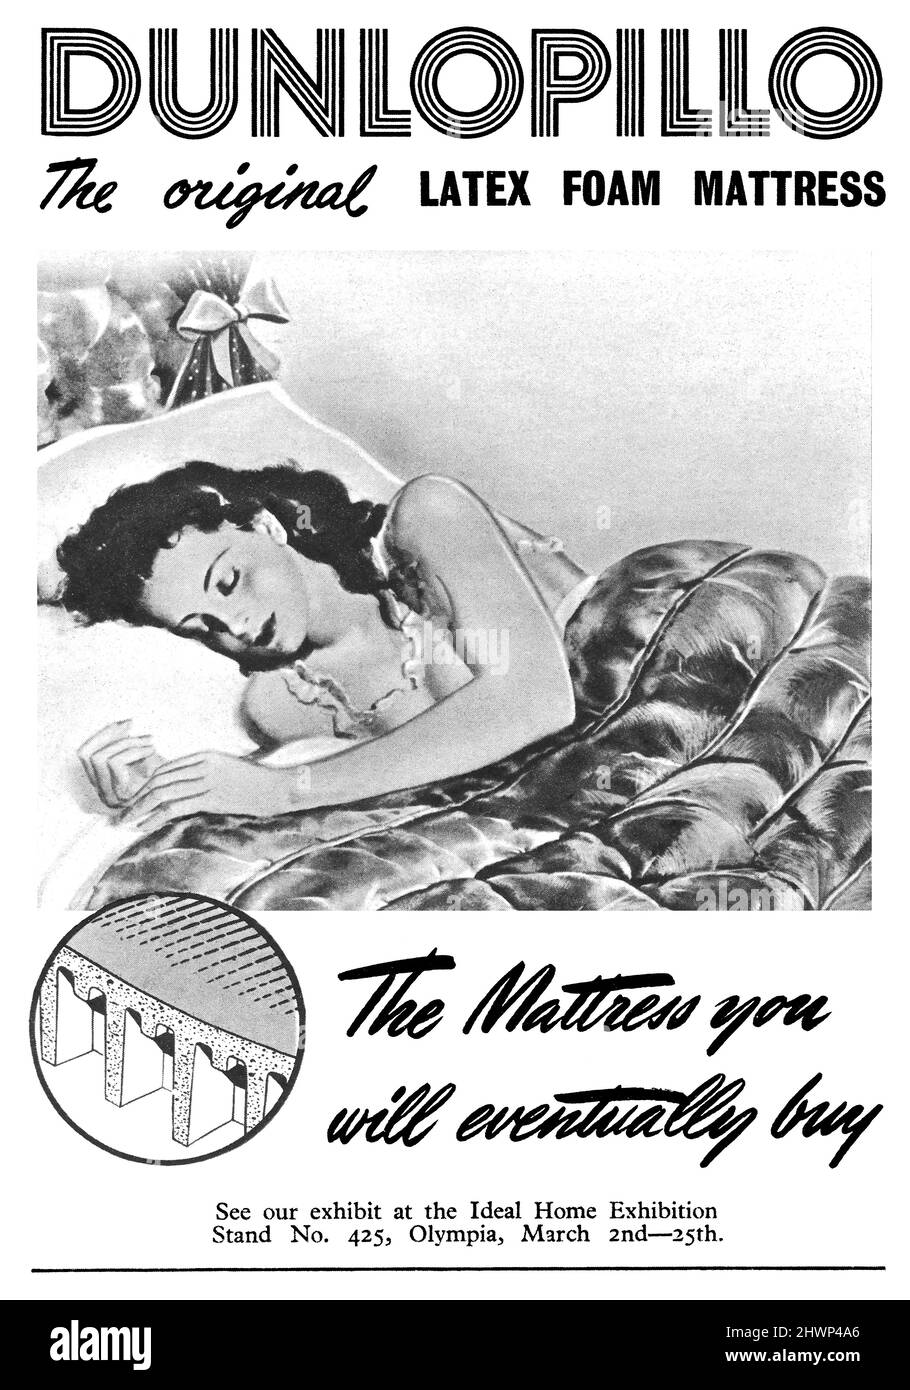 1948 British advertisement for Dunlopillo latex foam mattresses by Dunlop. Stock Photo